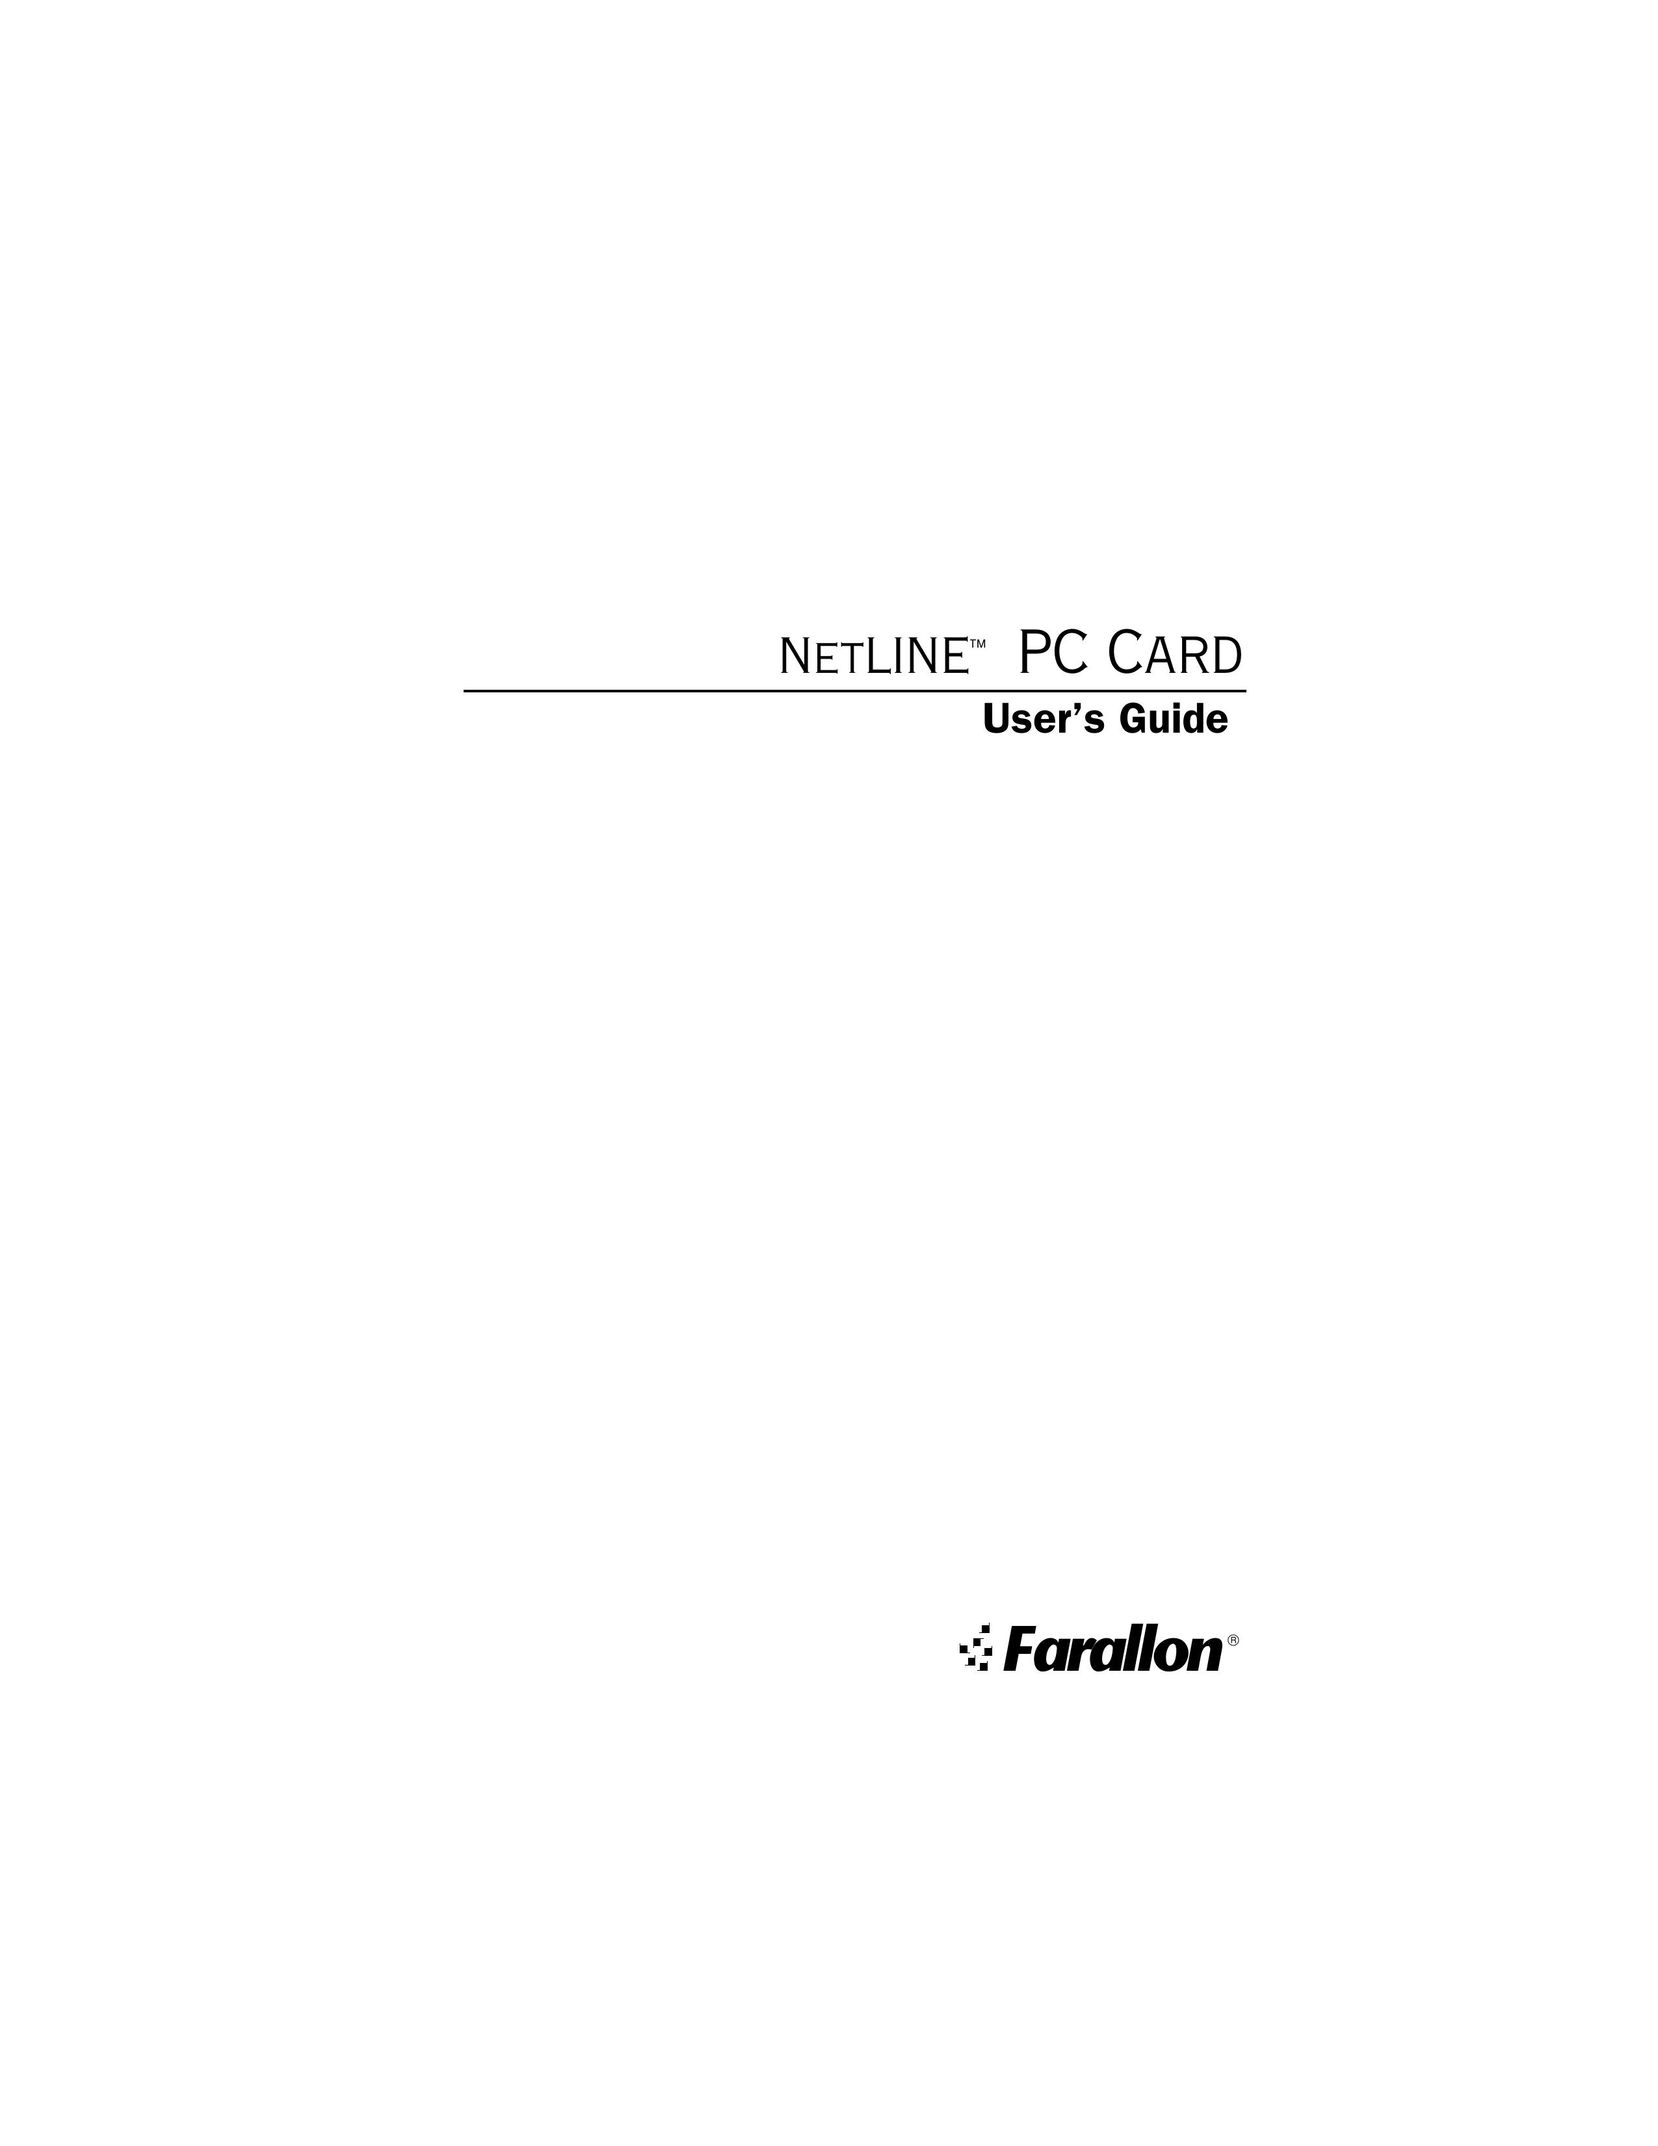 Farallon Communications NetLINE Network Card User Manual